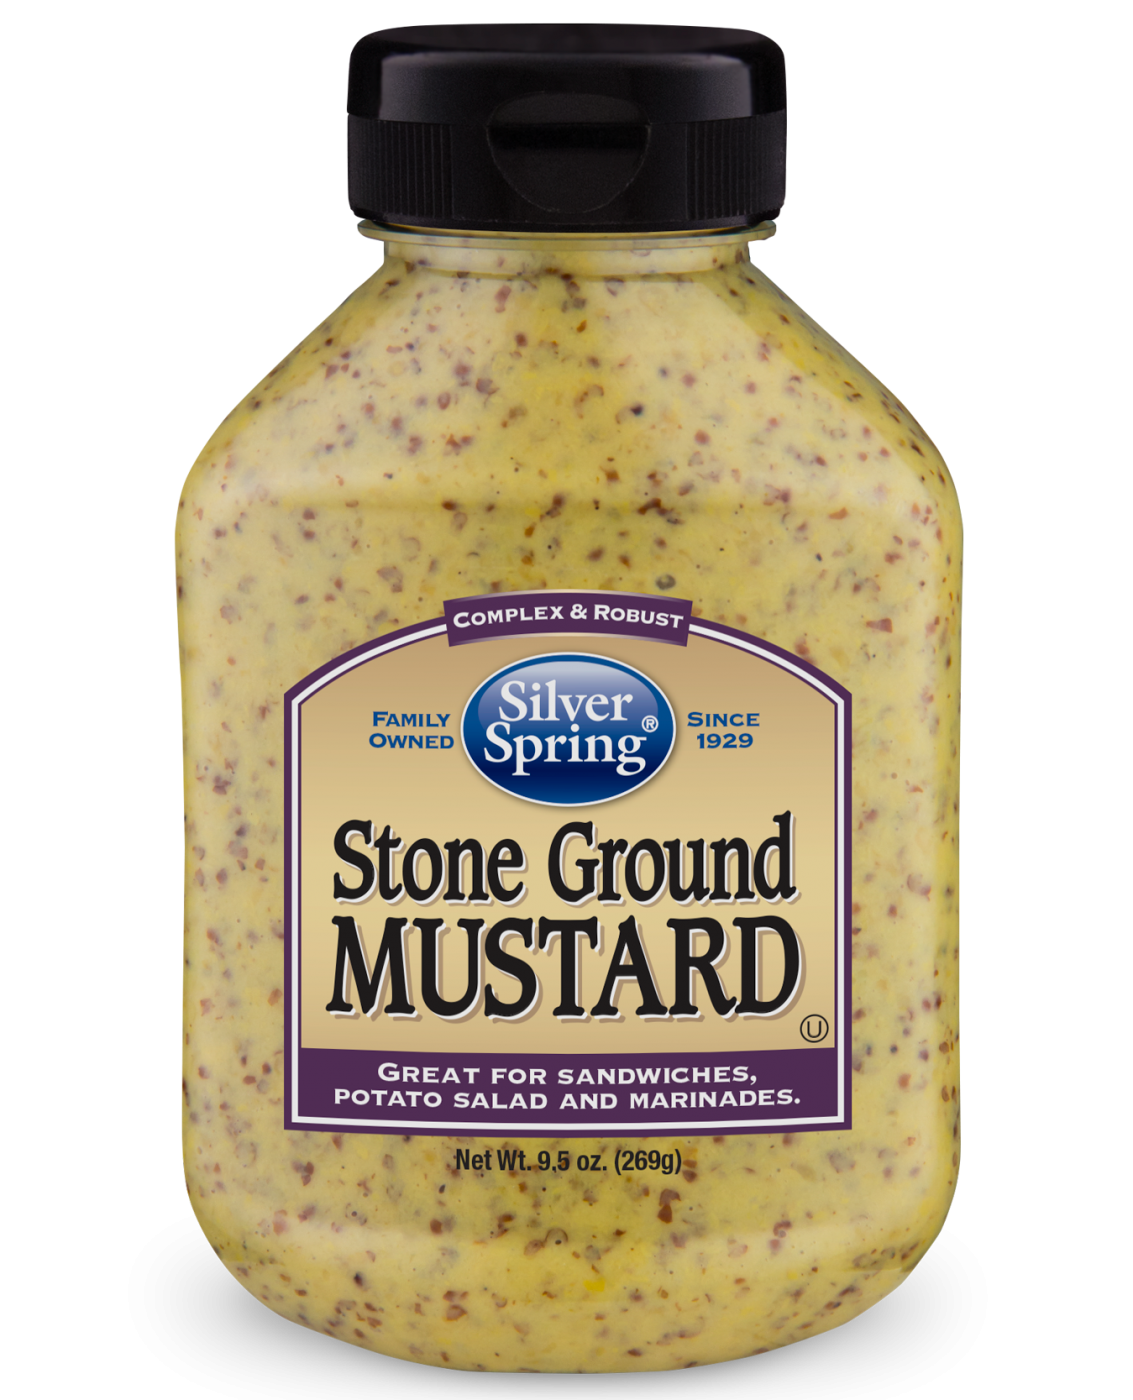 ss-stone-ground-mustard-9